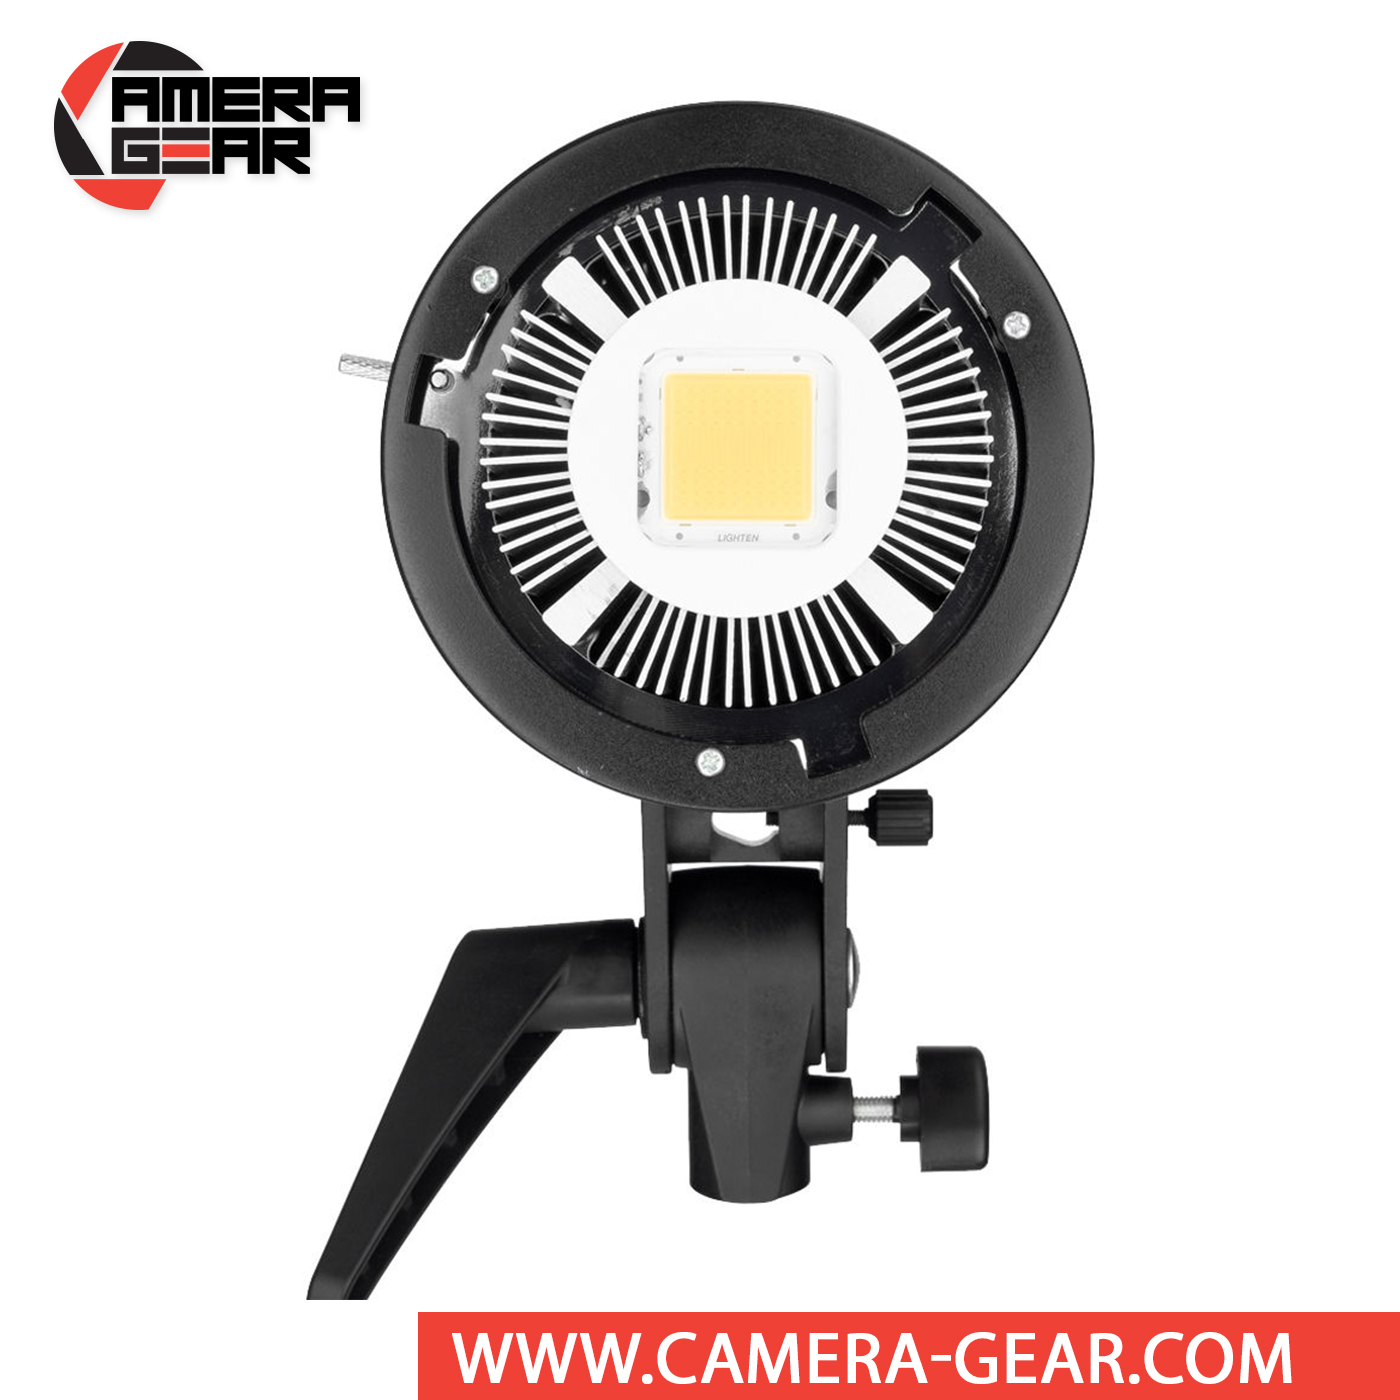 Stige slå op Outlaw Godox SL-60W LED Video Light - Camera Gear - Professional COB light